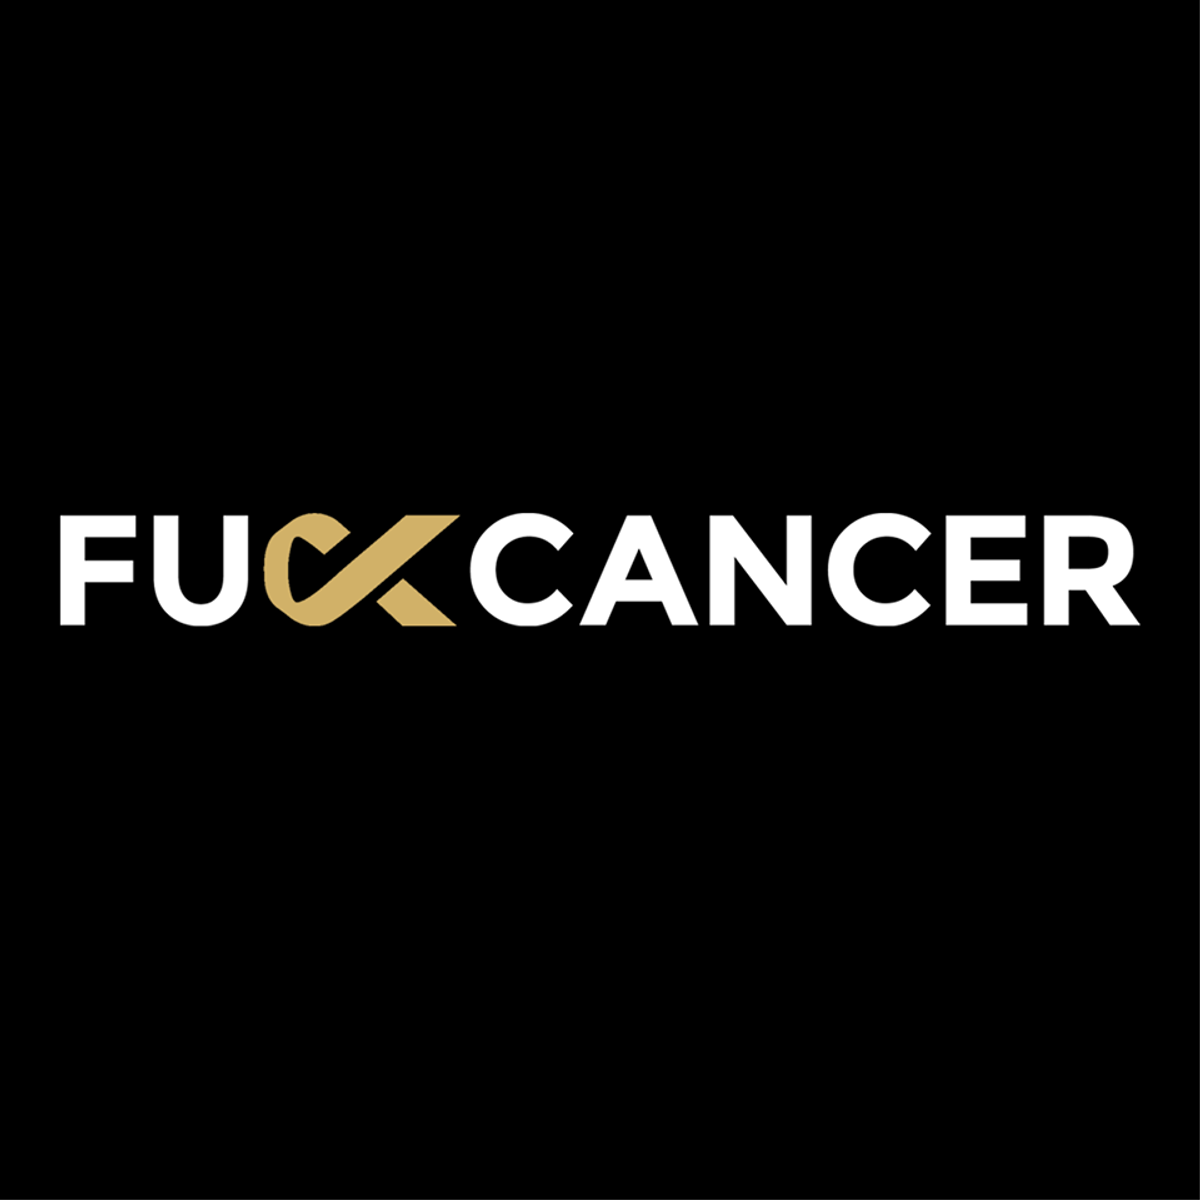 A Charity Spotlight on Fuck Cancer